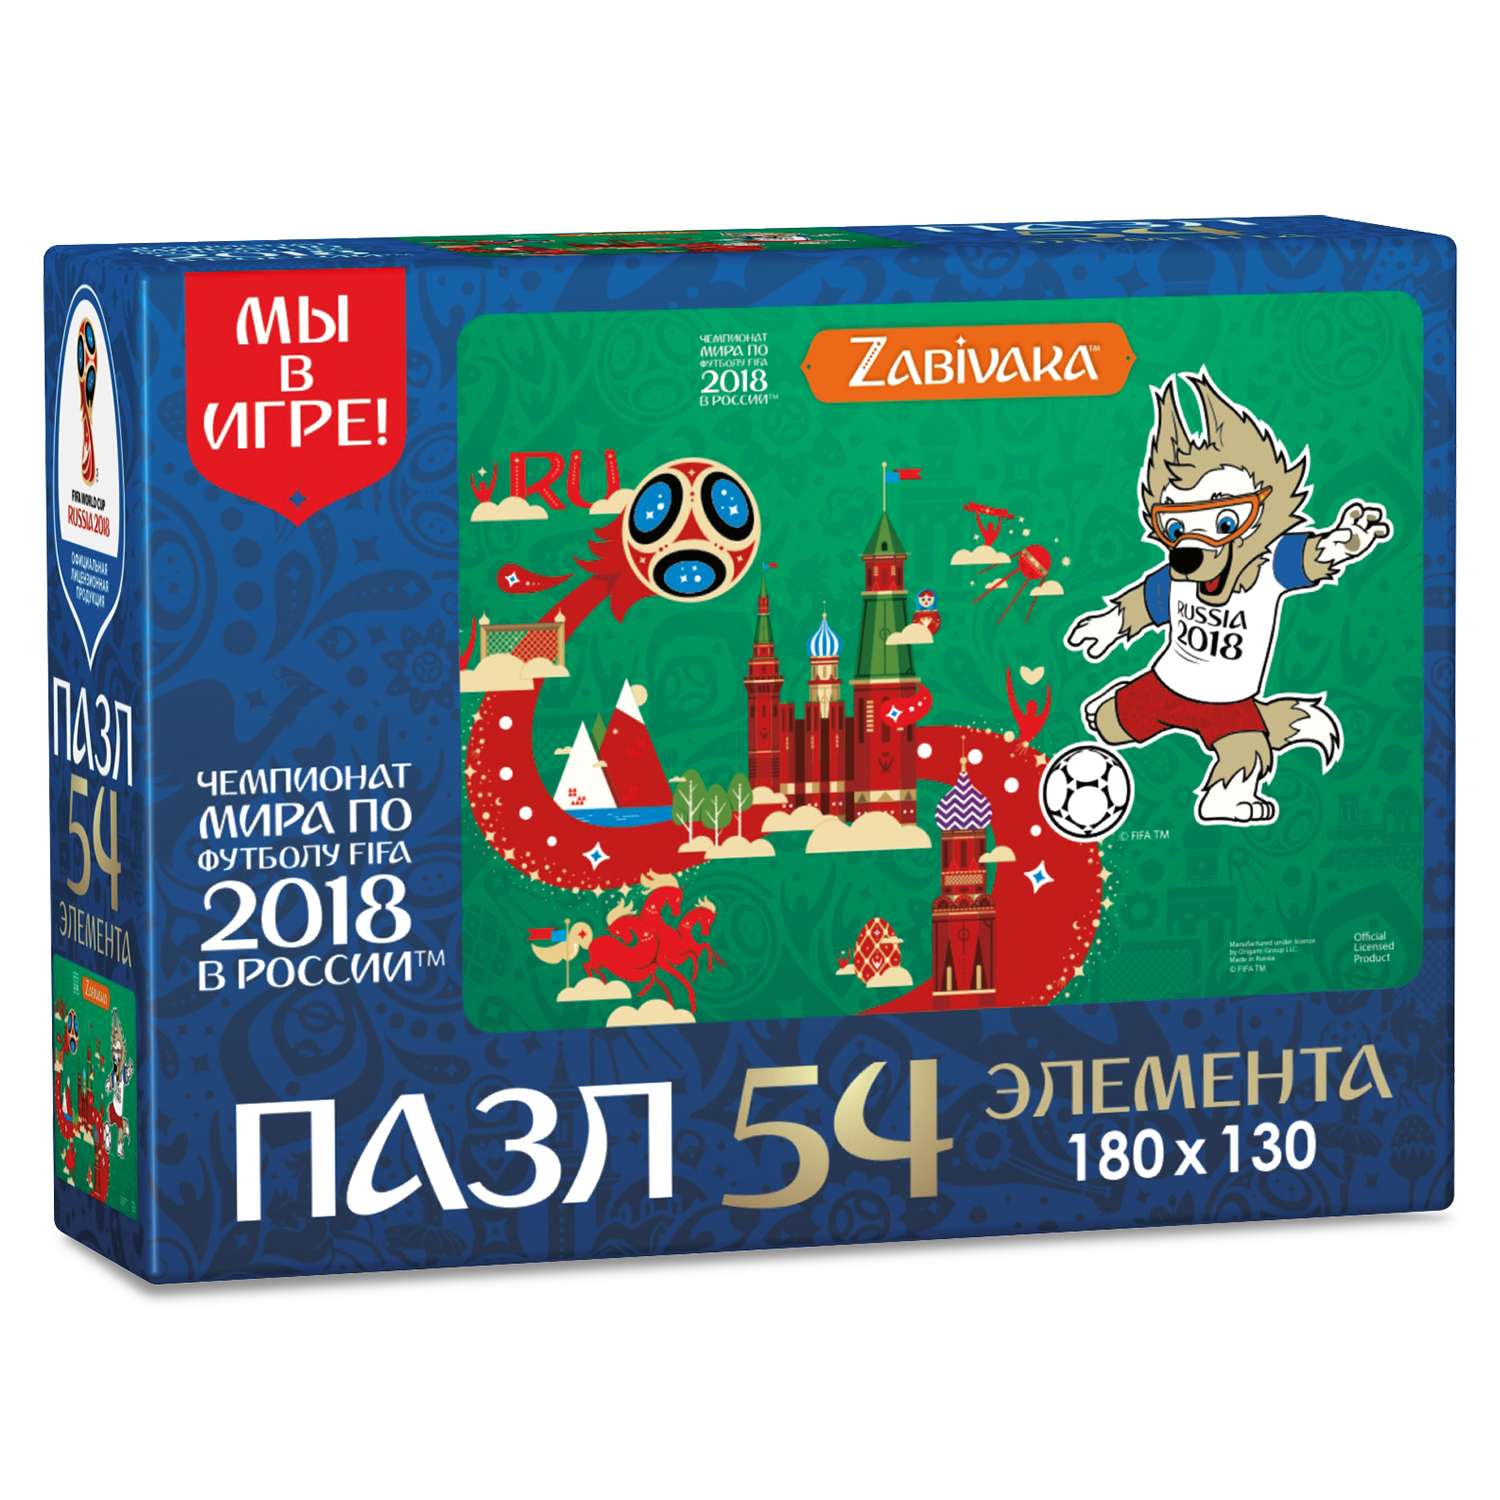 Пазл 2018 FIFA World Cup Russia TM Забивака (03785) 54 элемента в ассортименте - фото 2